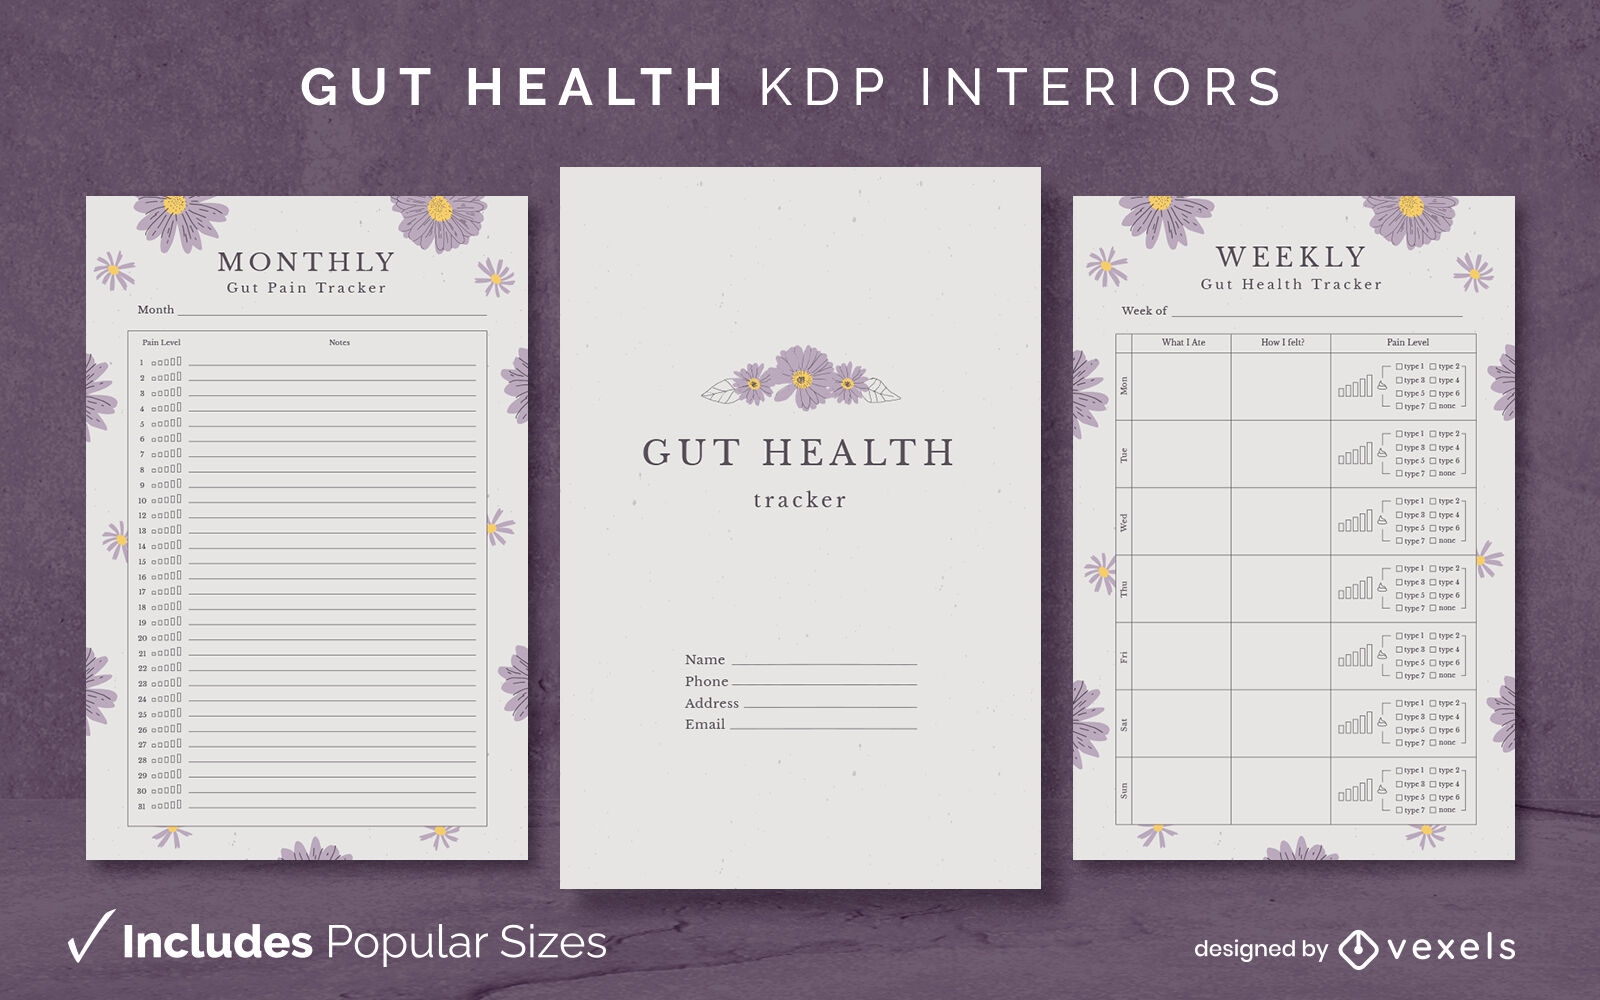 Gut health tracker kdp interior design